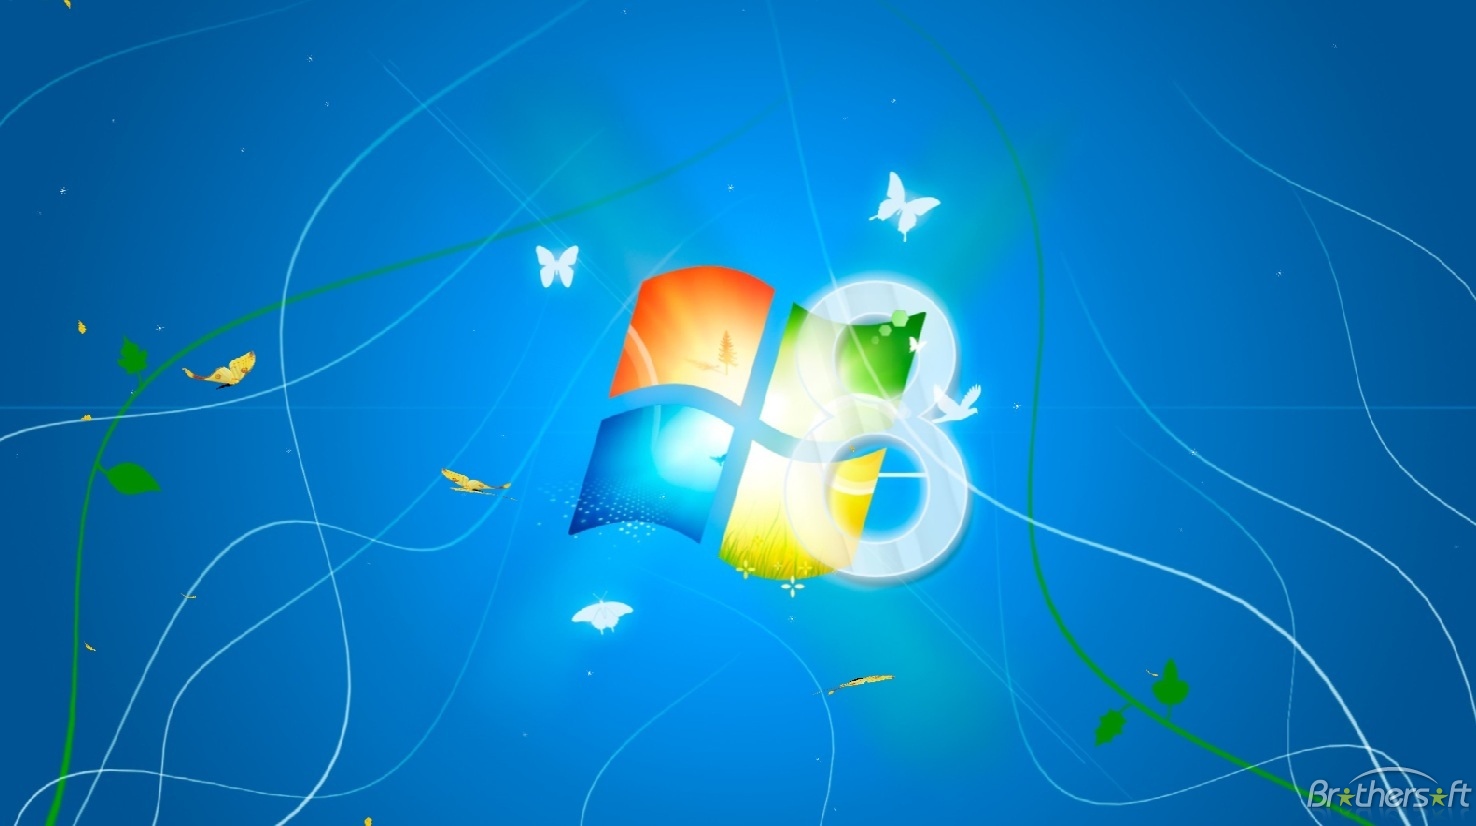 Free Windows 8 Light Animated Wallpaper Windows 8 Light Animated